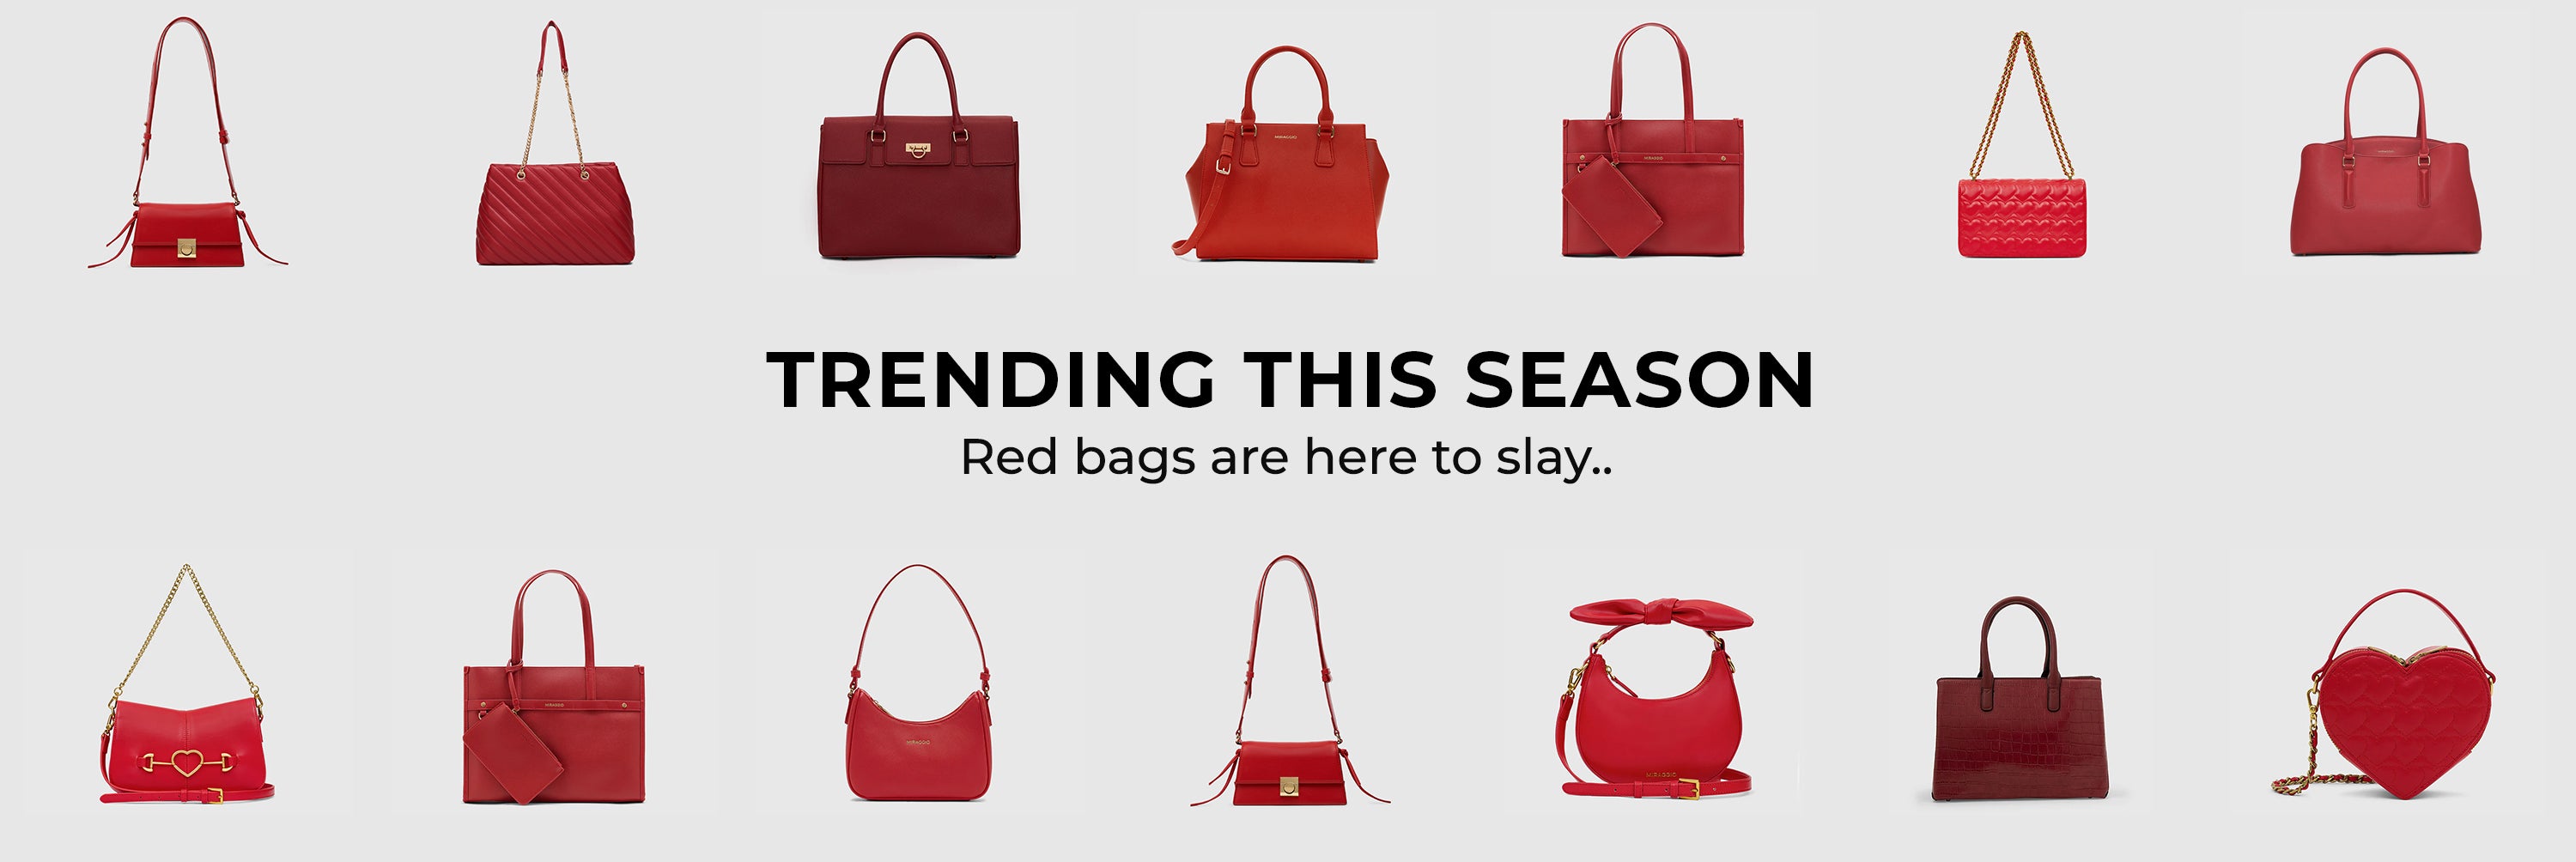 Top 5 must-have luxury bags | Femina.in